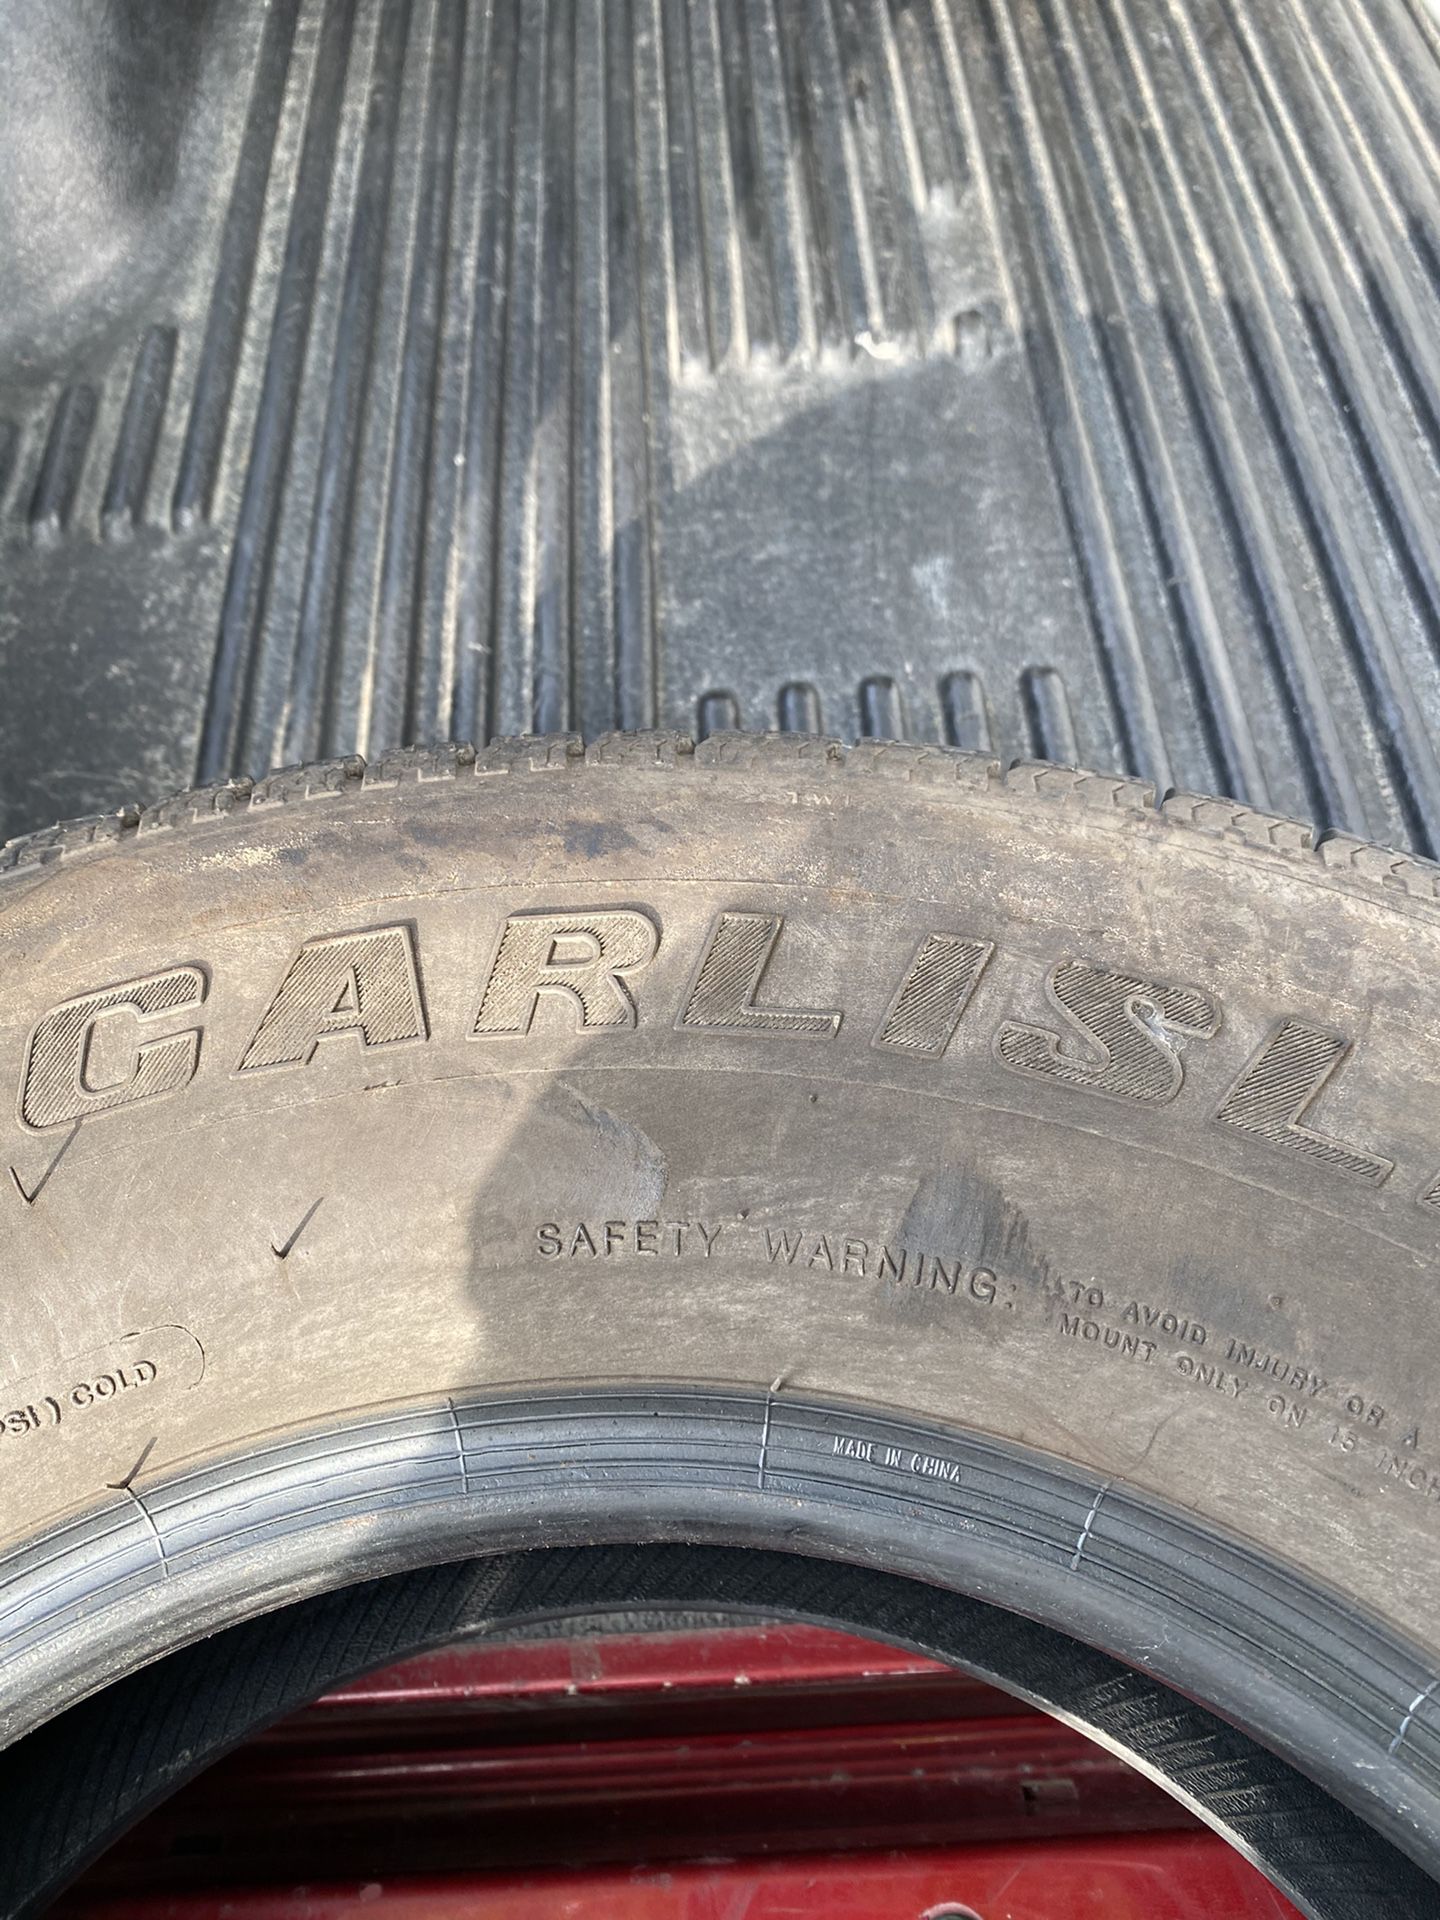 Trailer tires Carlisle 225/75/15